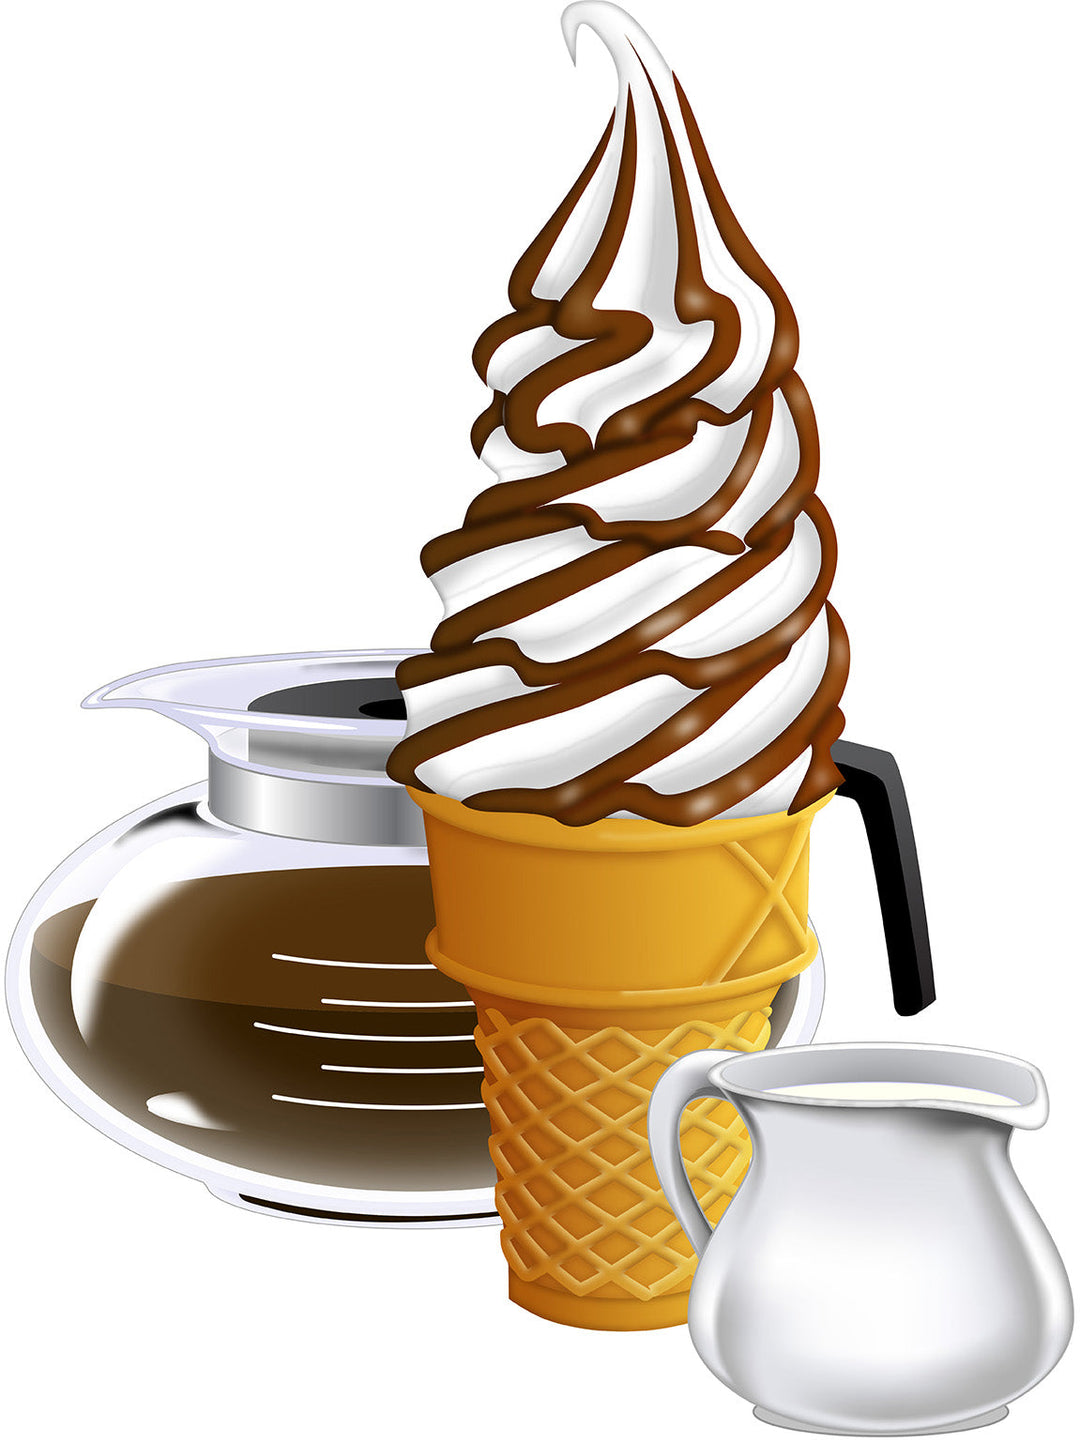 COFFEE N' CREME FLAVOR - Original “Stripe” Syrup For Soft Serve by Flavor Burst Canada - 1 Gallon (3.8 liters)